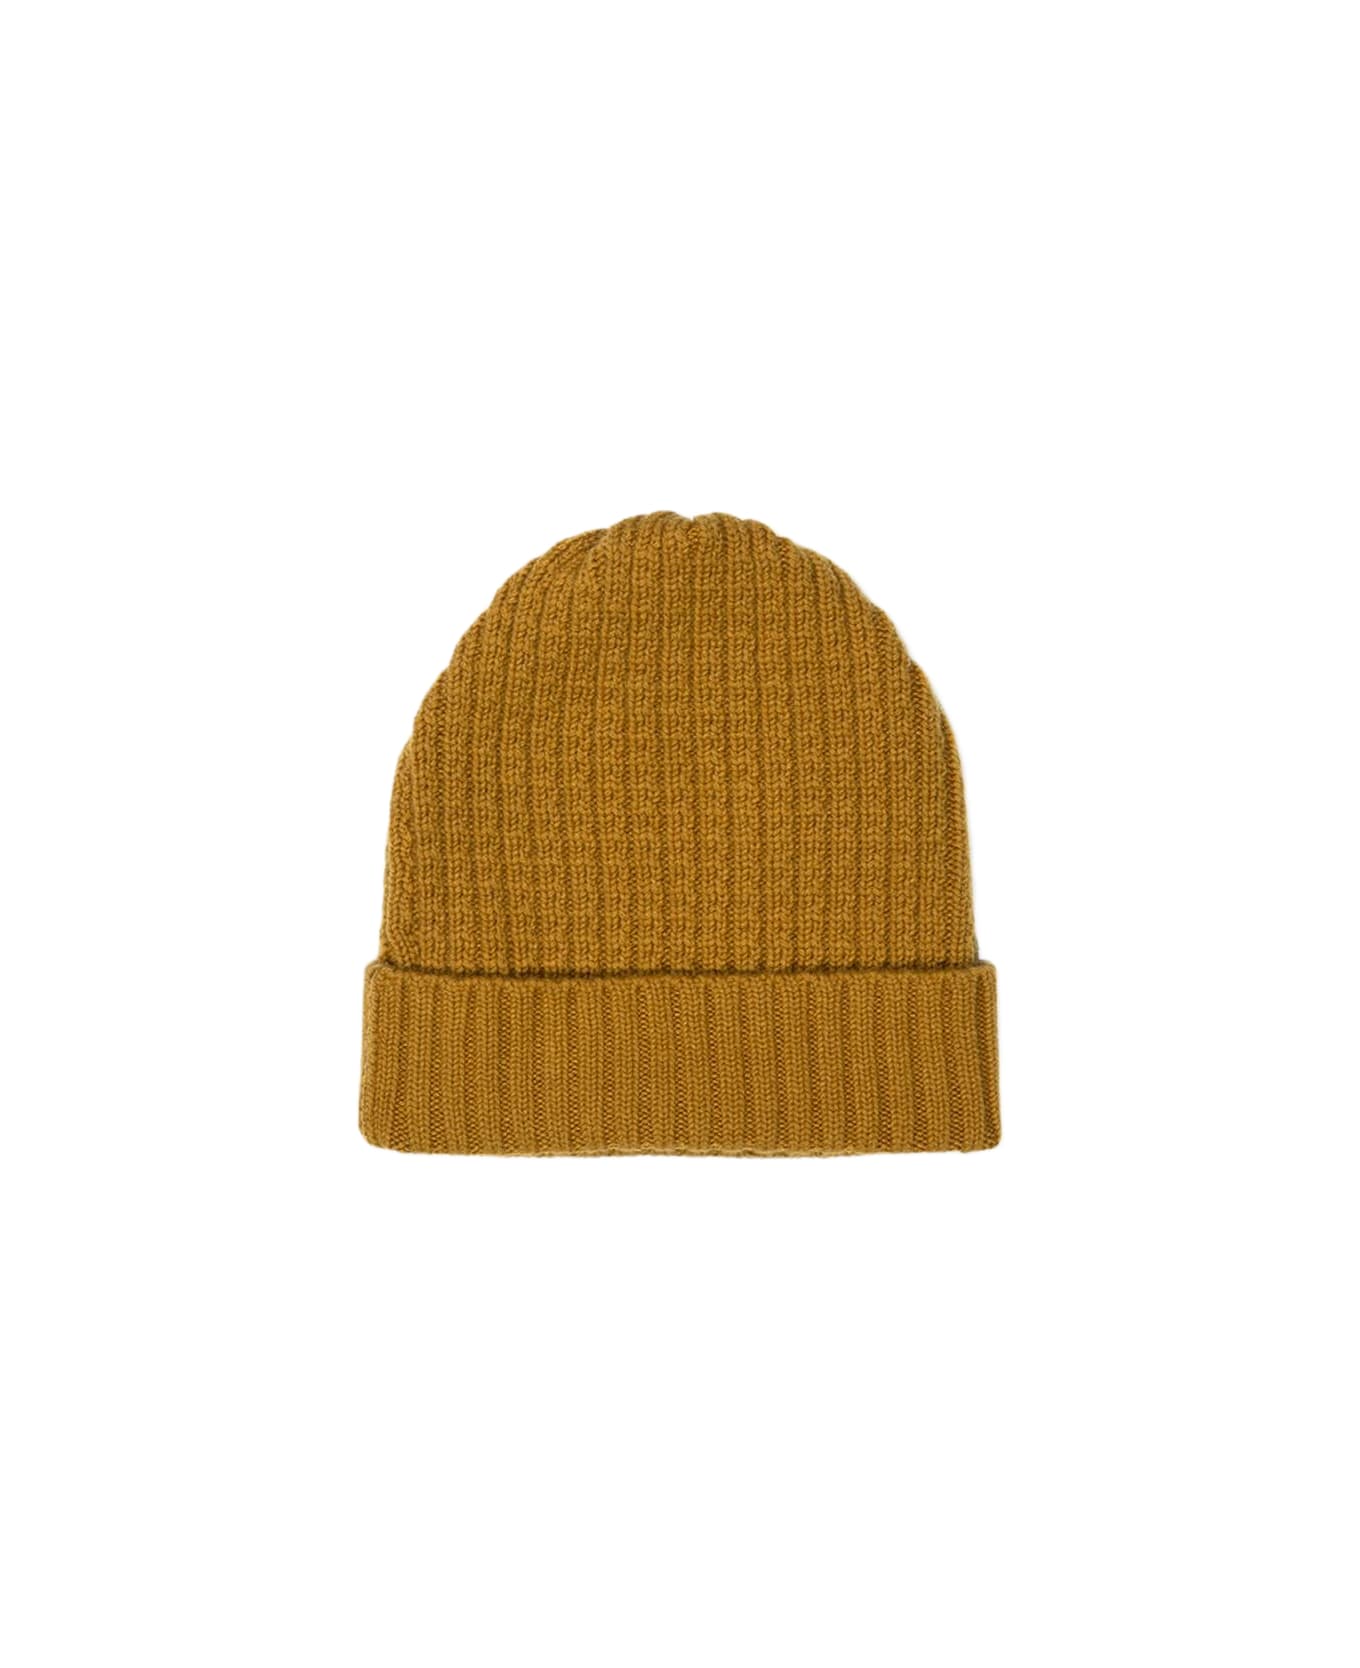 Larusmiani Cap Hat - Goldenrod 帽子